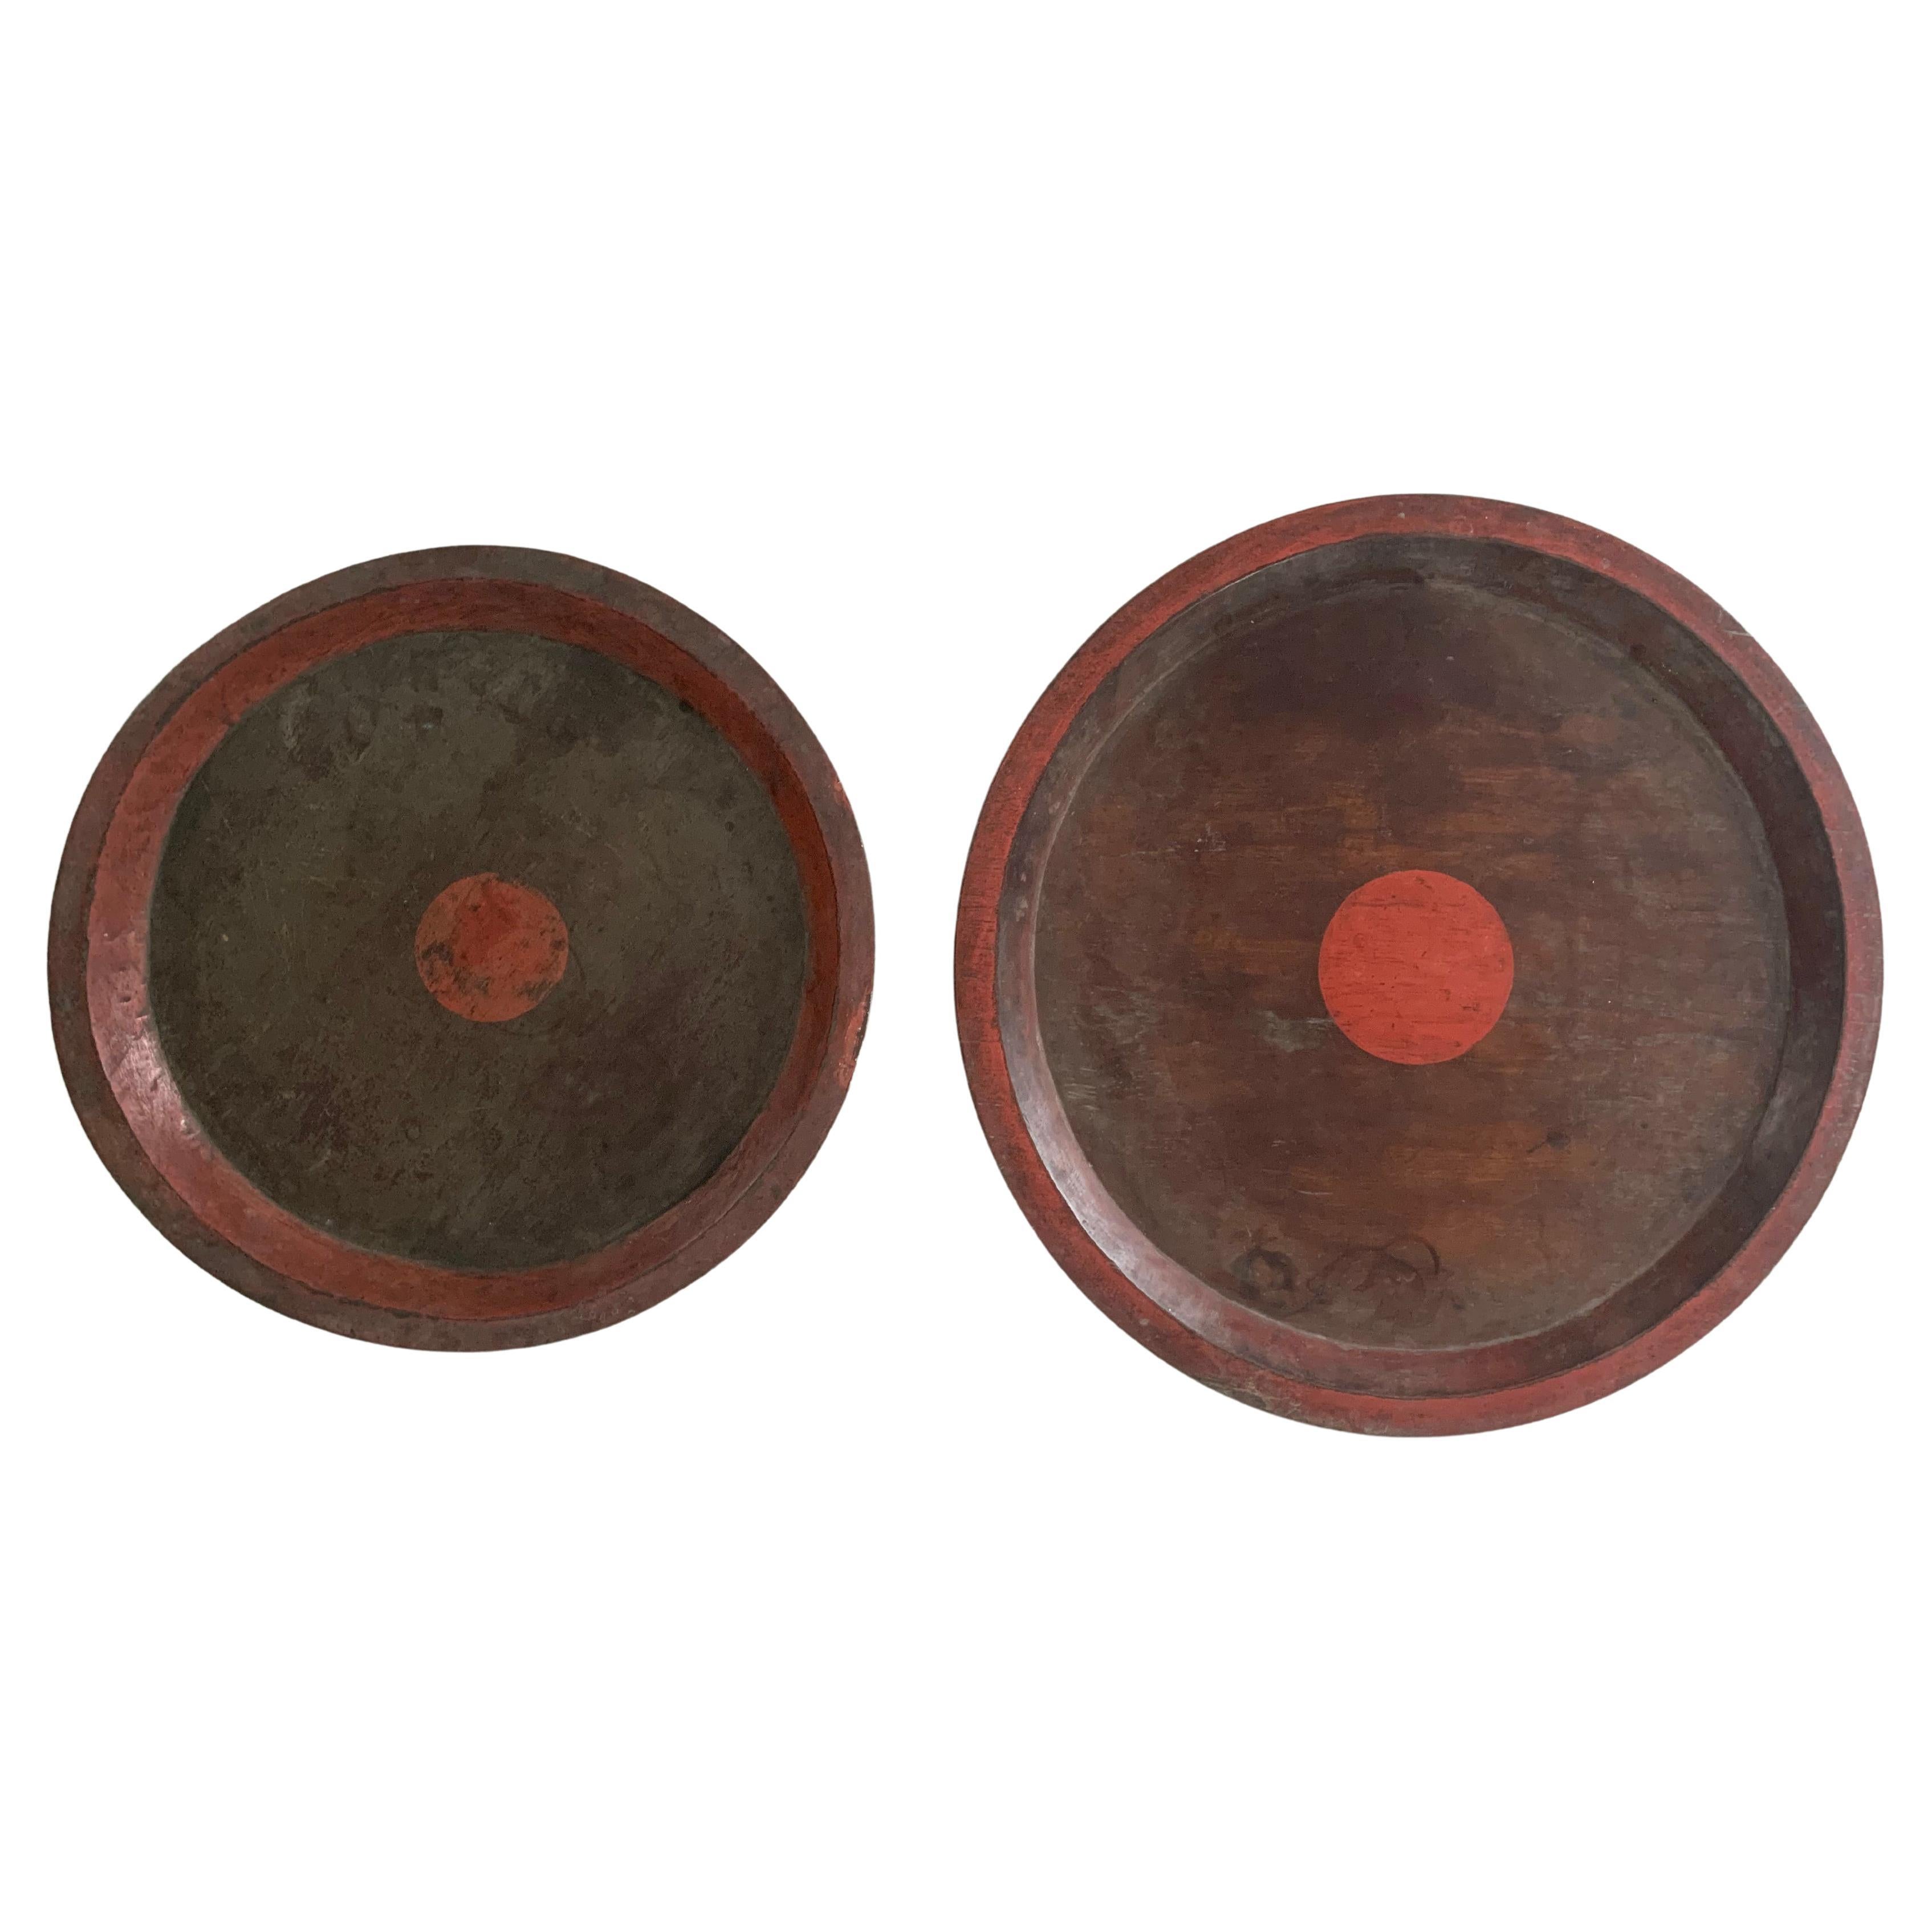 Chinesisches Tablett-Set aus rotem Holz